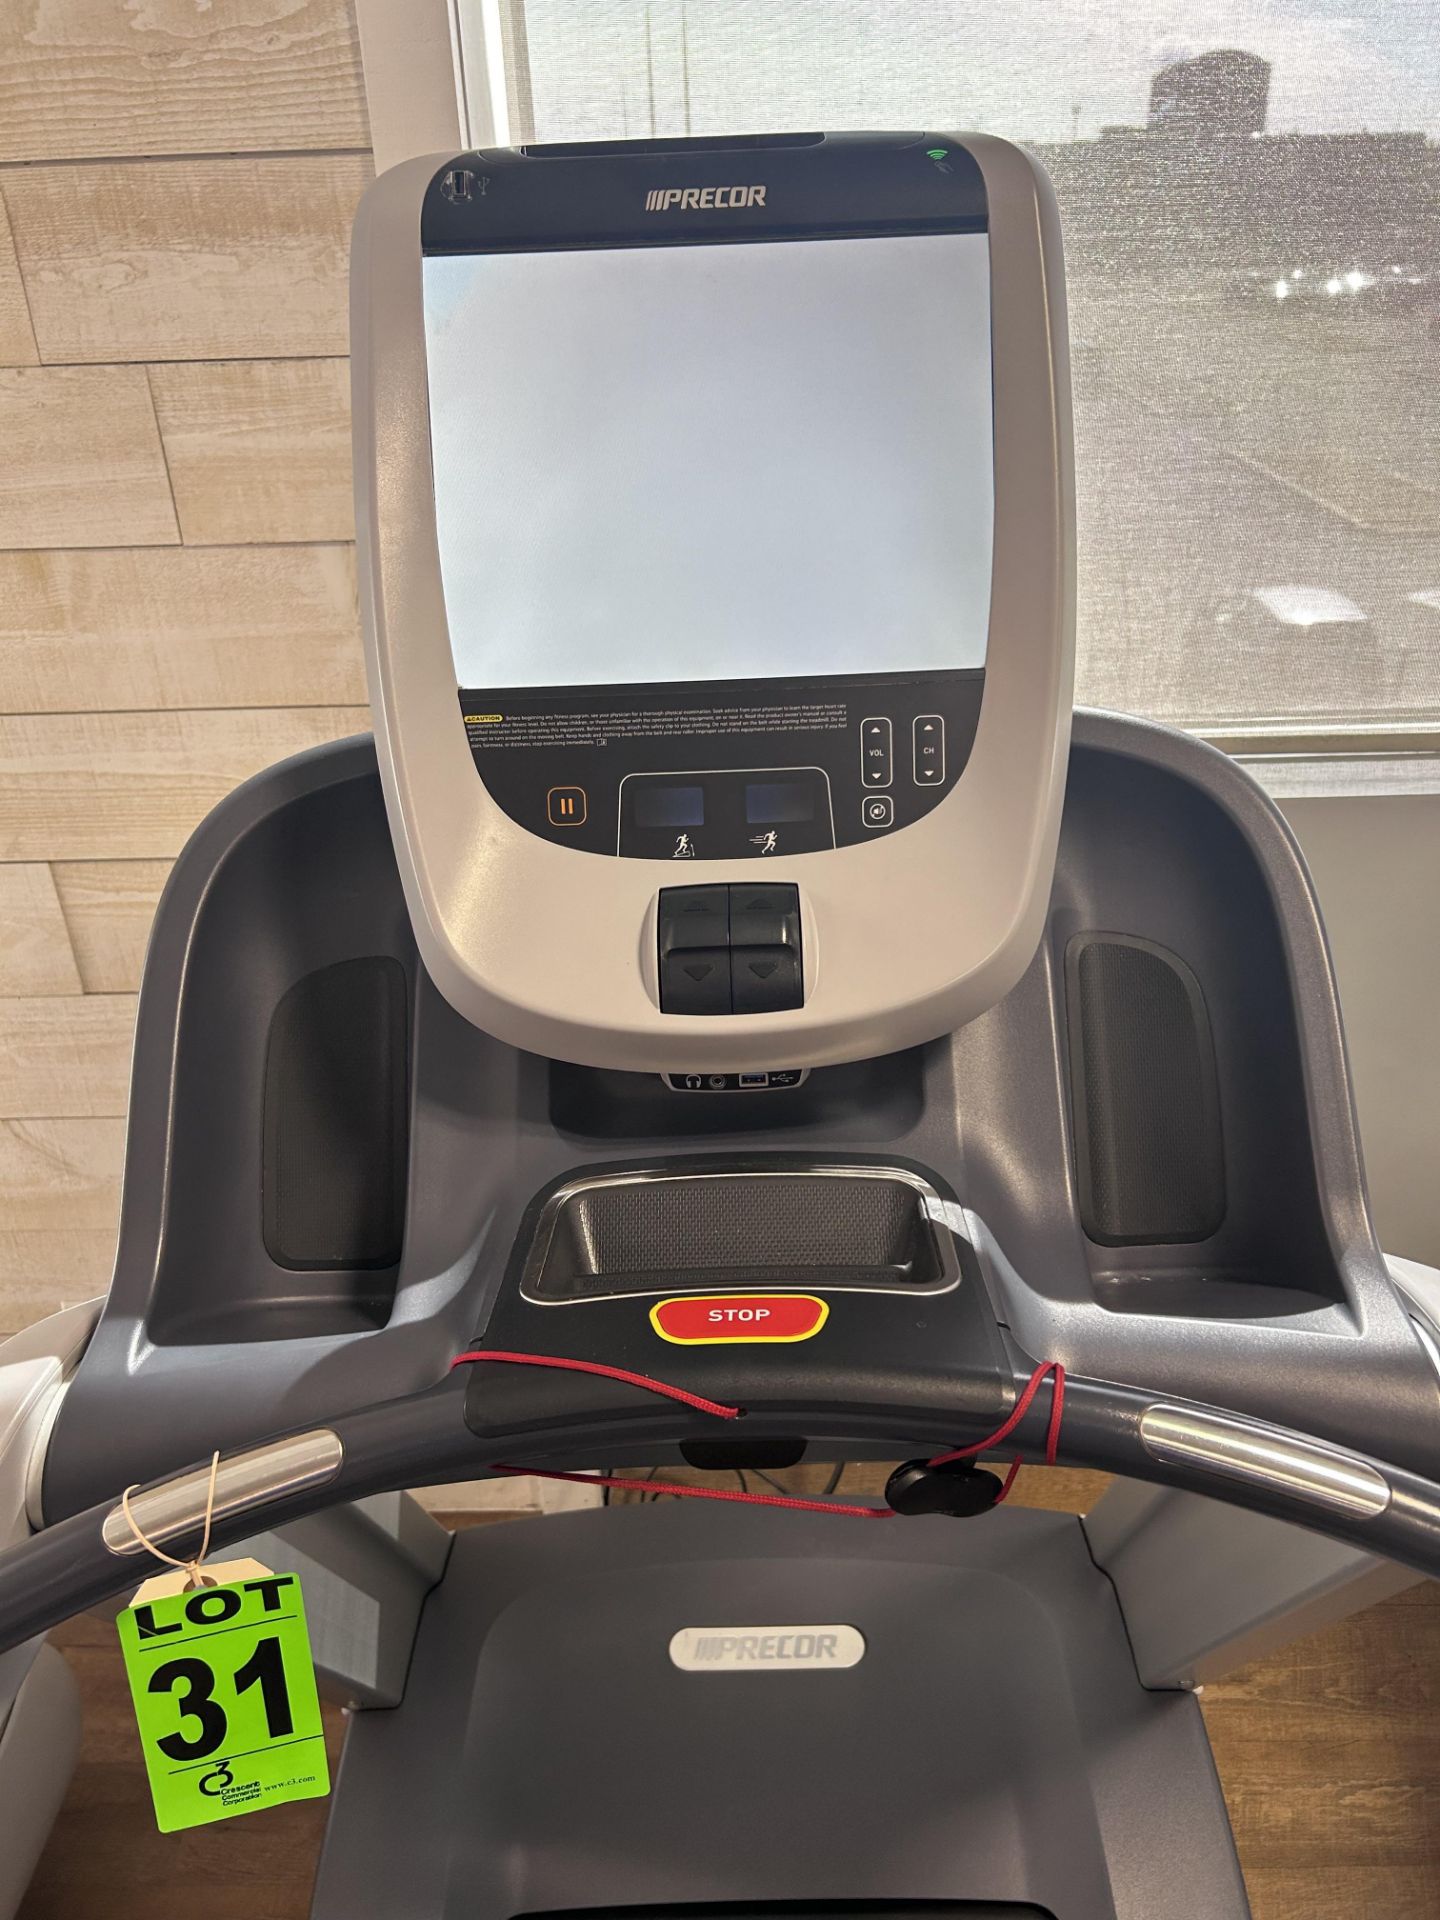 PRECOR mod. TRM 811 Treadmill with PRECOR P80 Display Console, ser. AGNBJ20150043 - Image 2 of 4